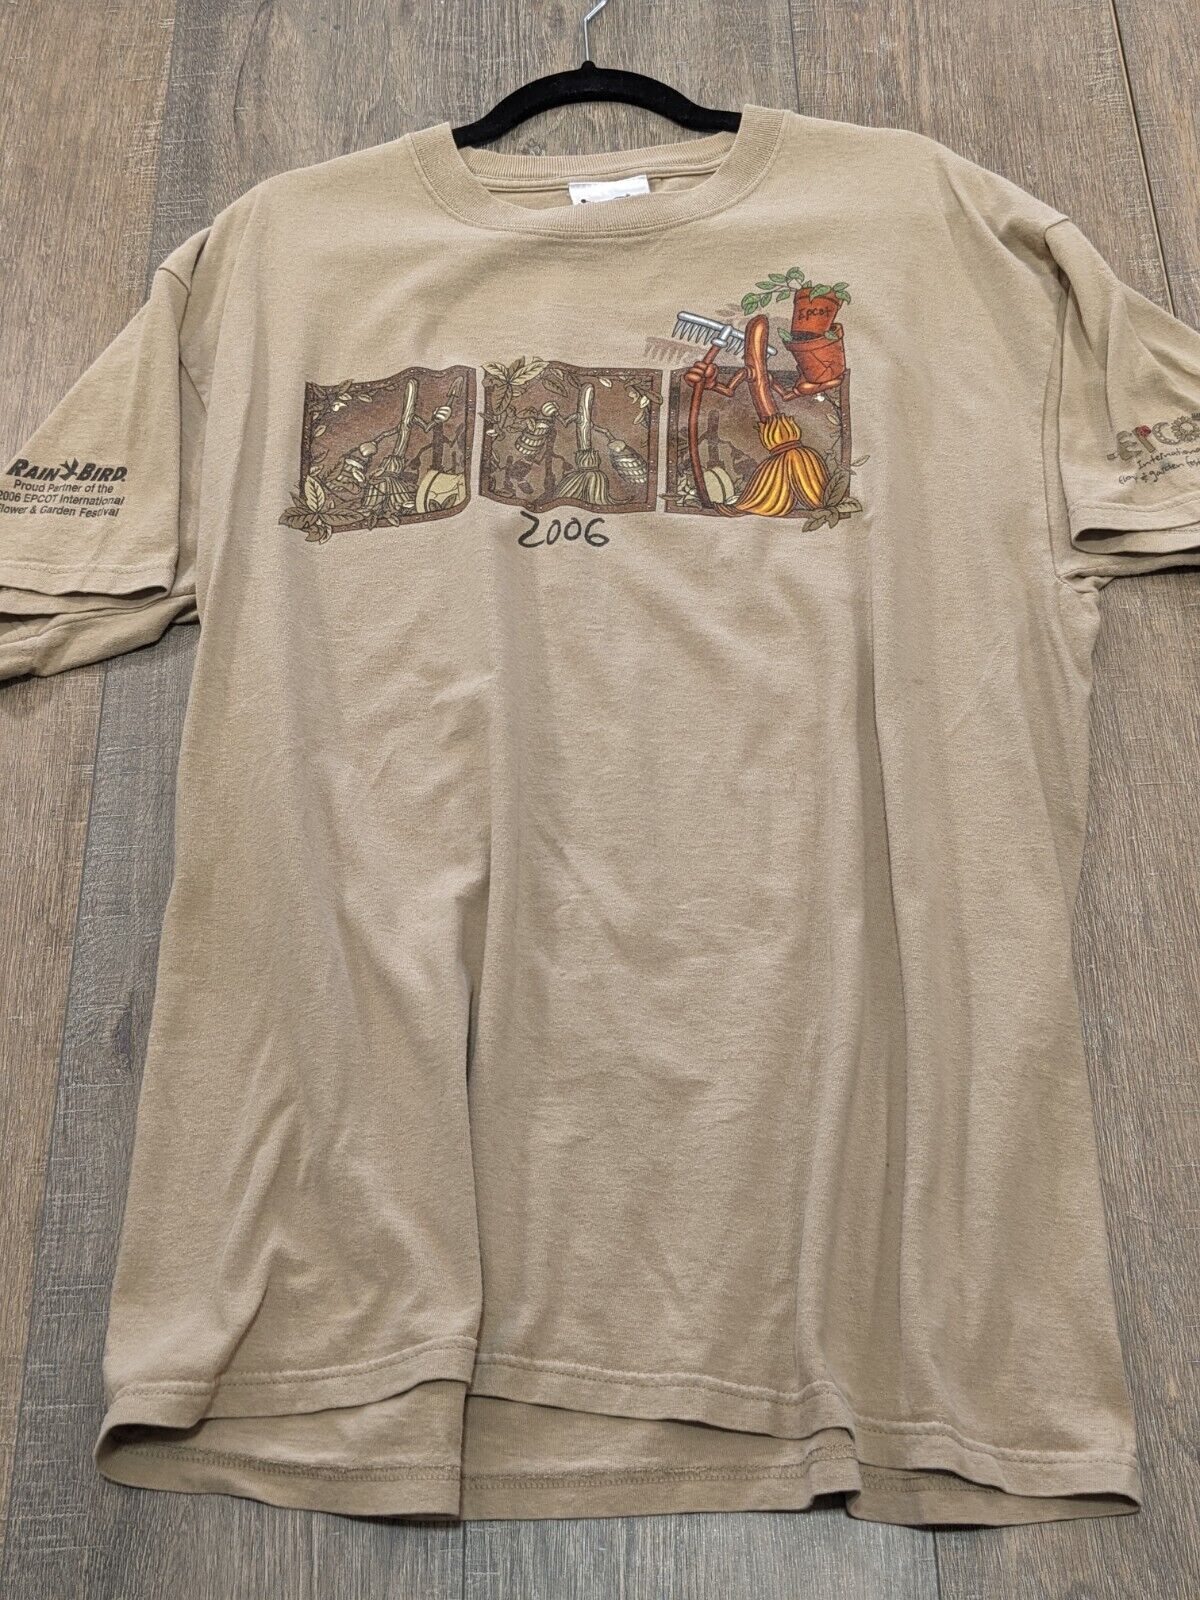 Vintage Disney T Shirt Adult XL Beige Short Sleeve 06 Epcot Flower and Garden